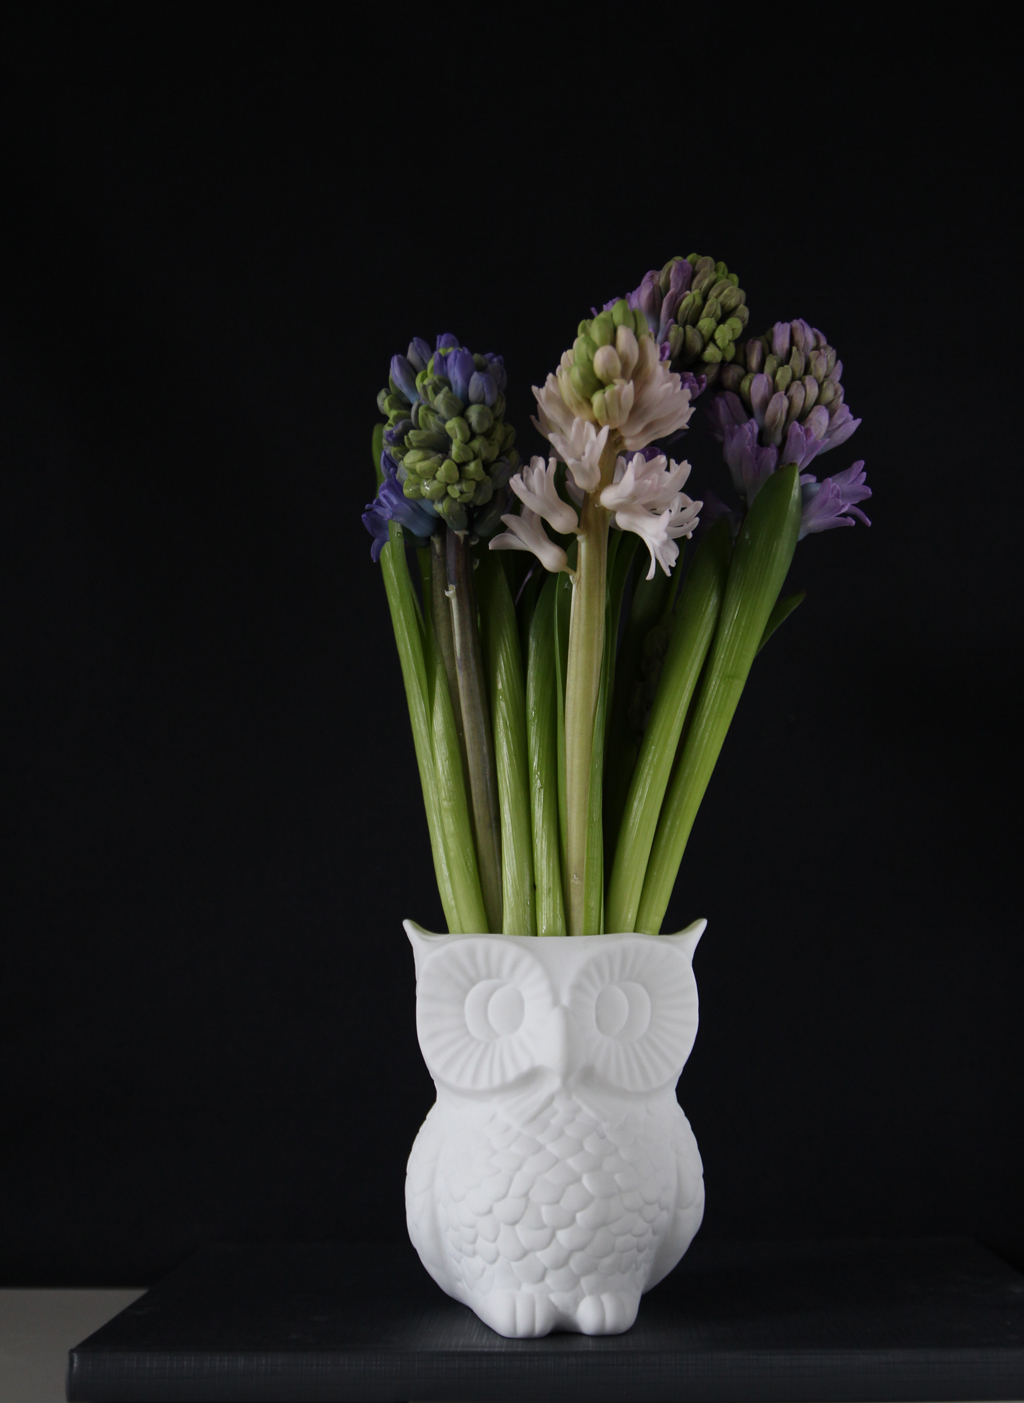 2 flower girls - owl vase and yacinths